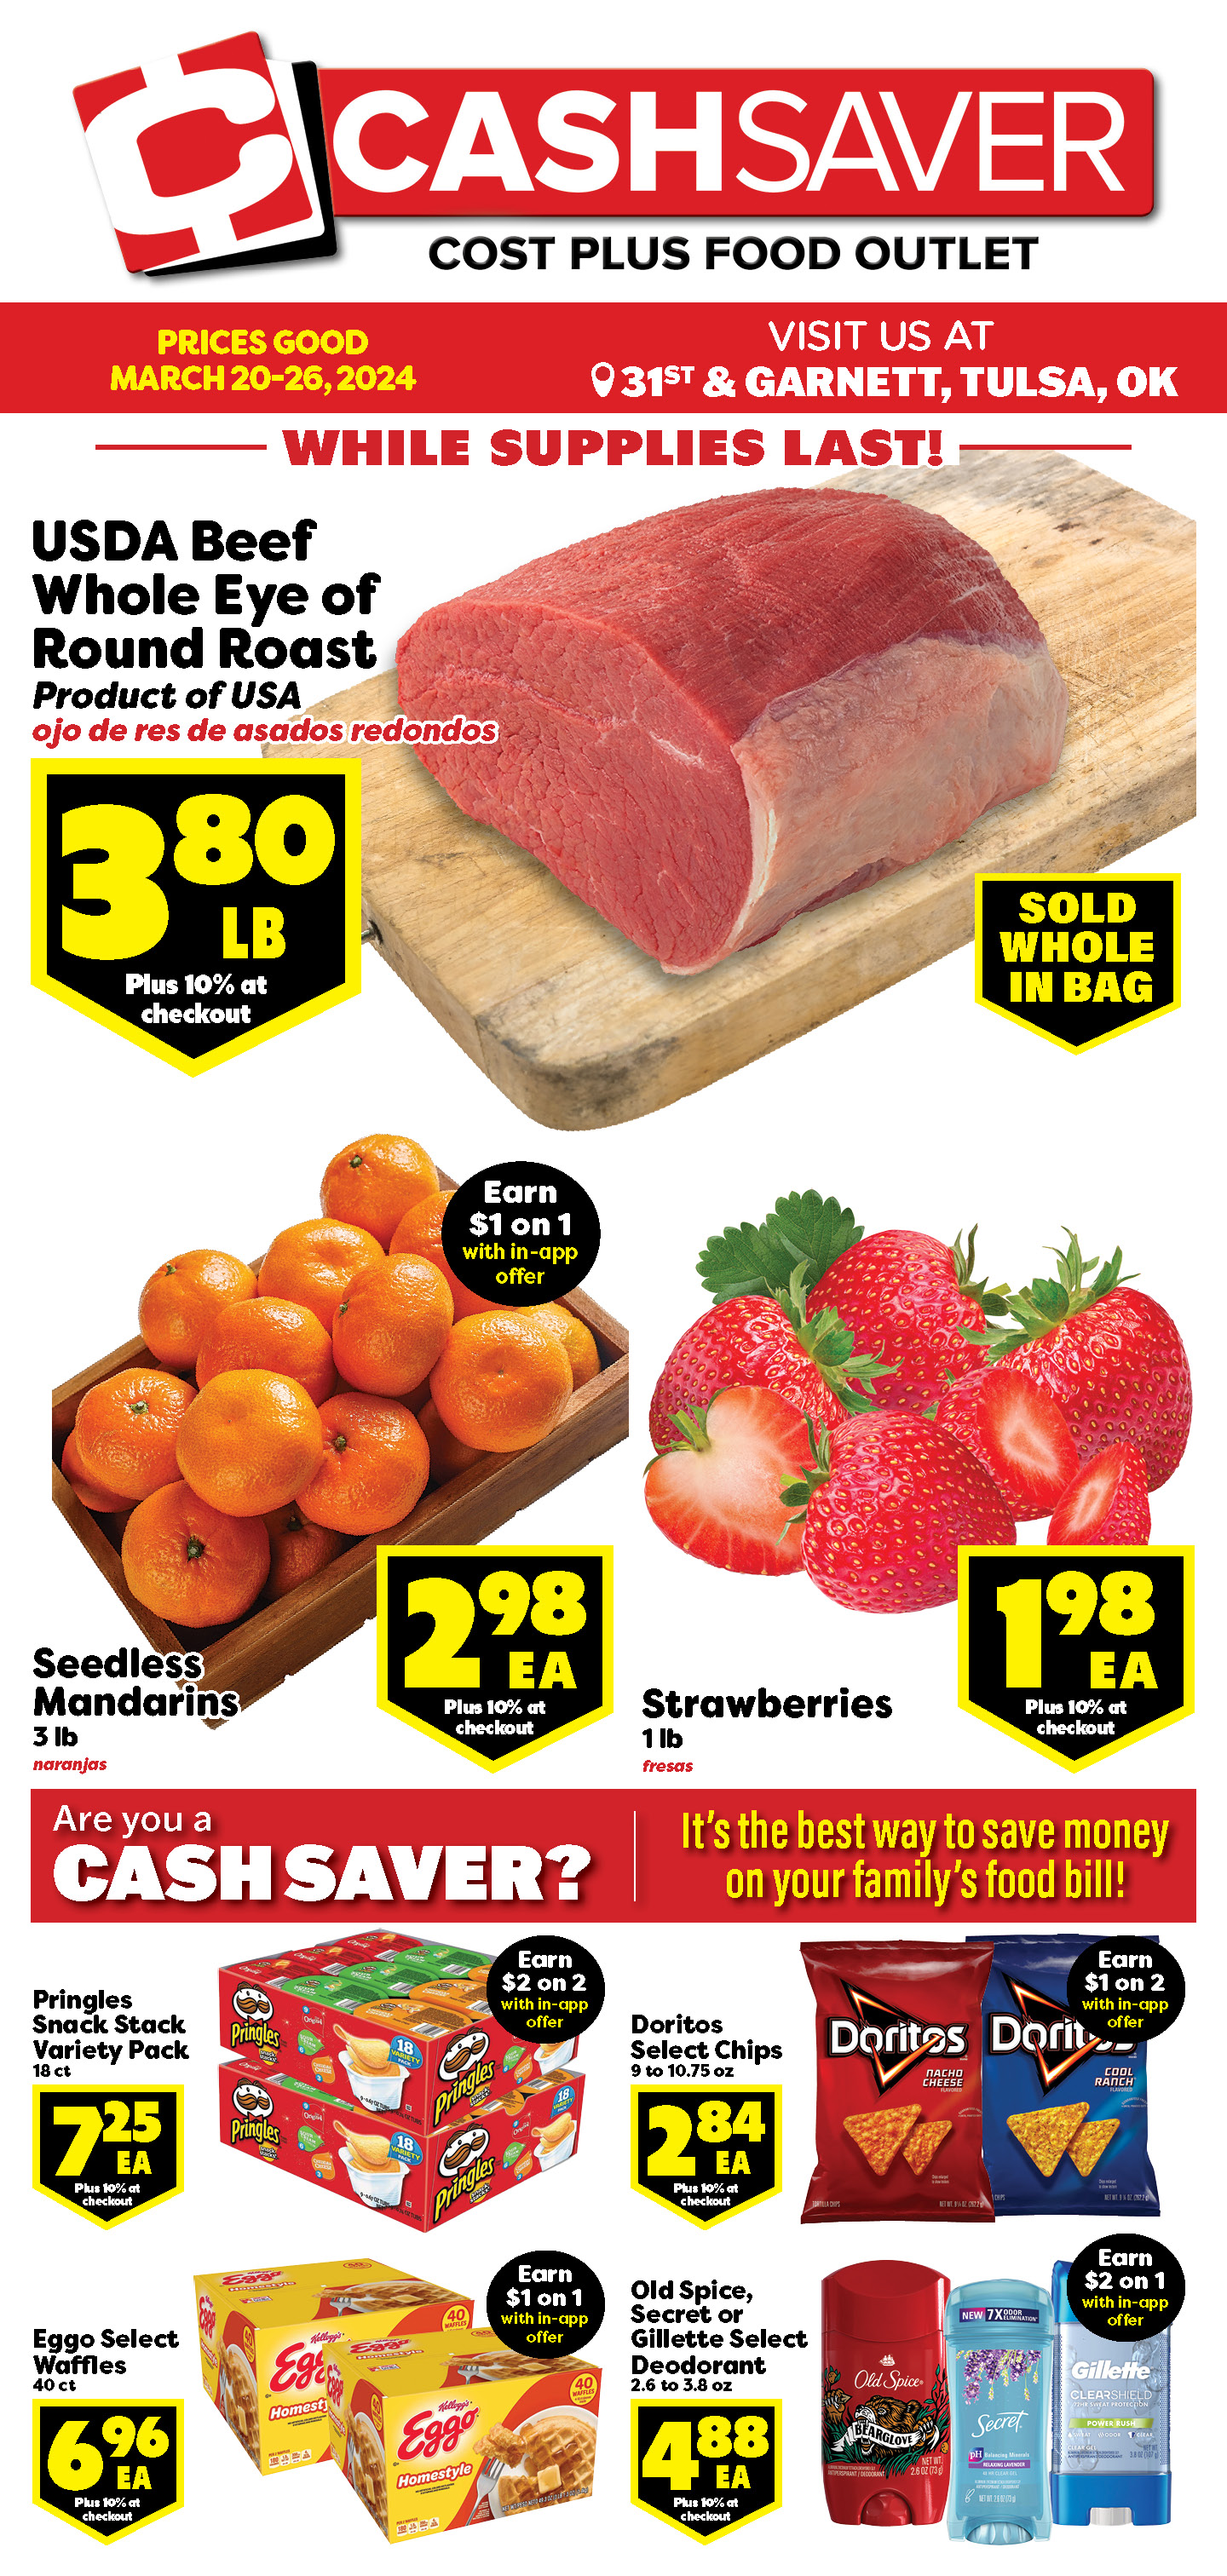 Harlan Cash Saver - Recipe: Peppercorn Beef Filets